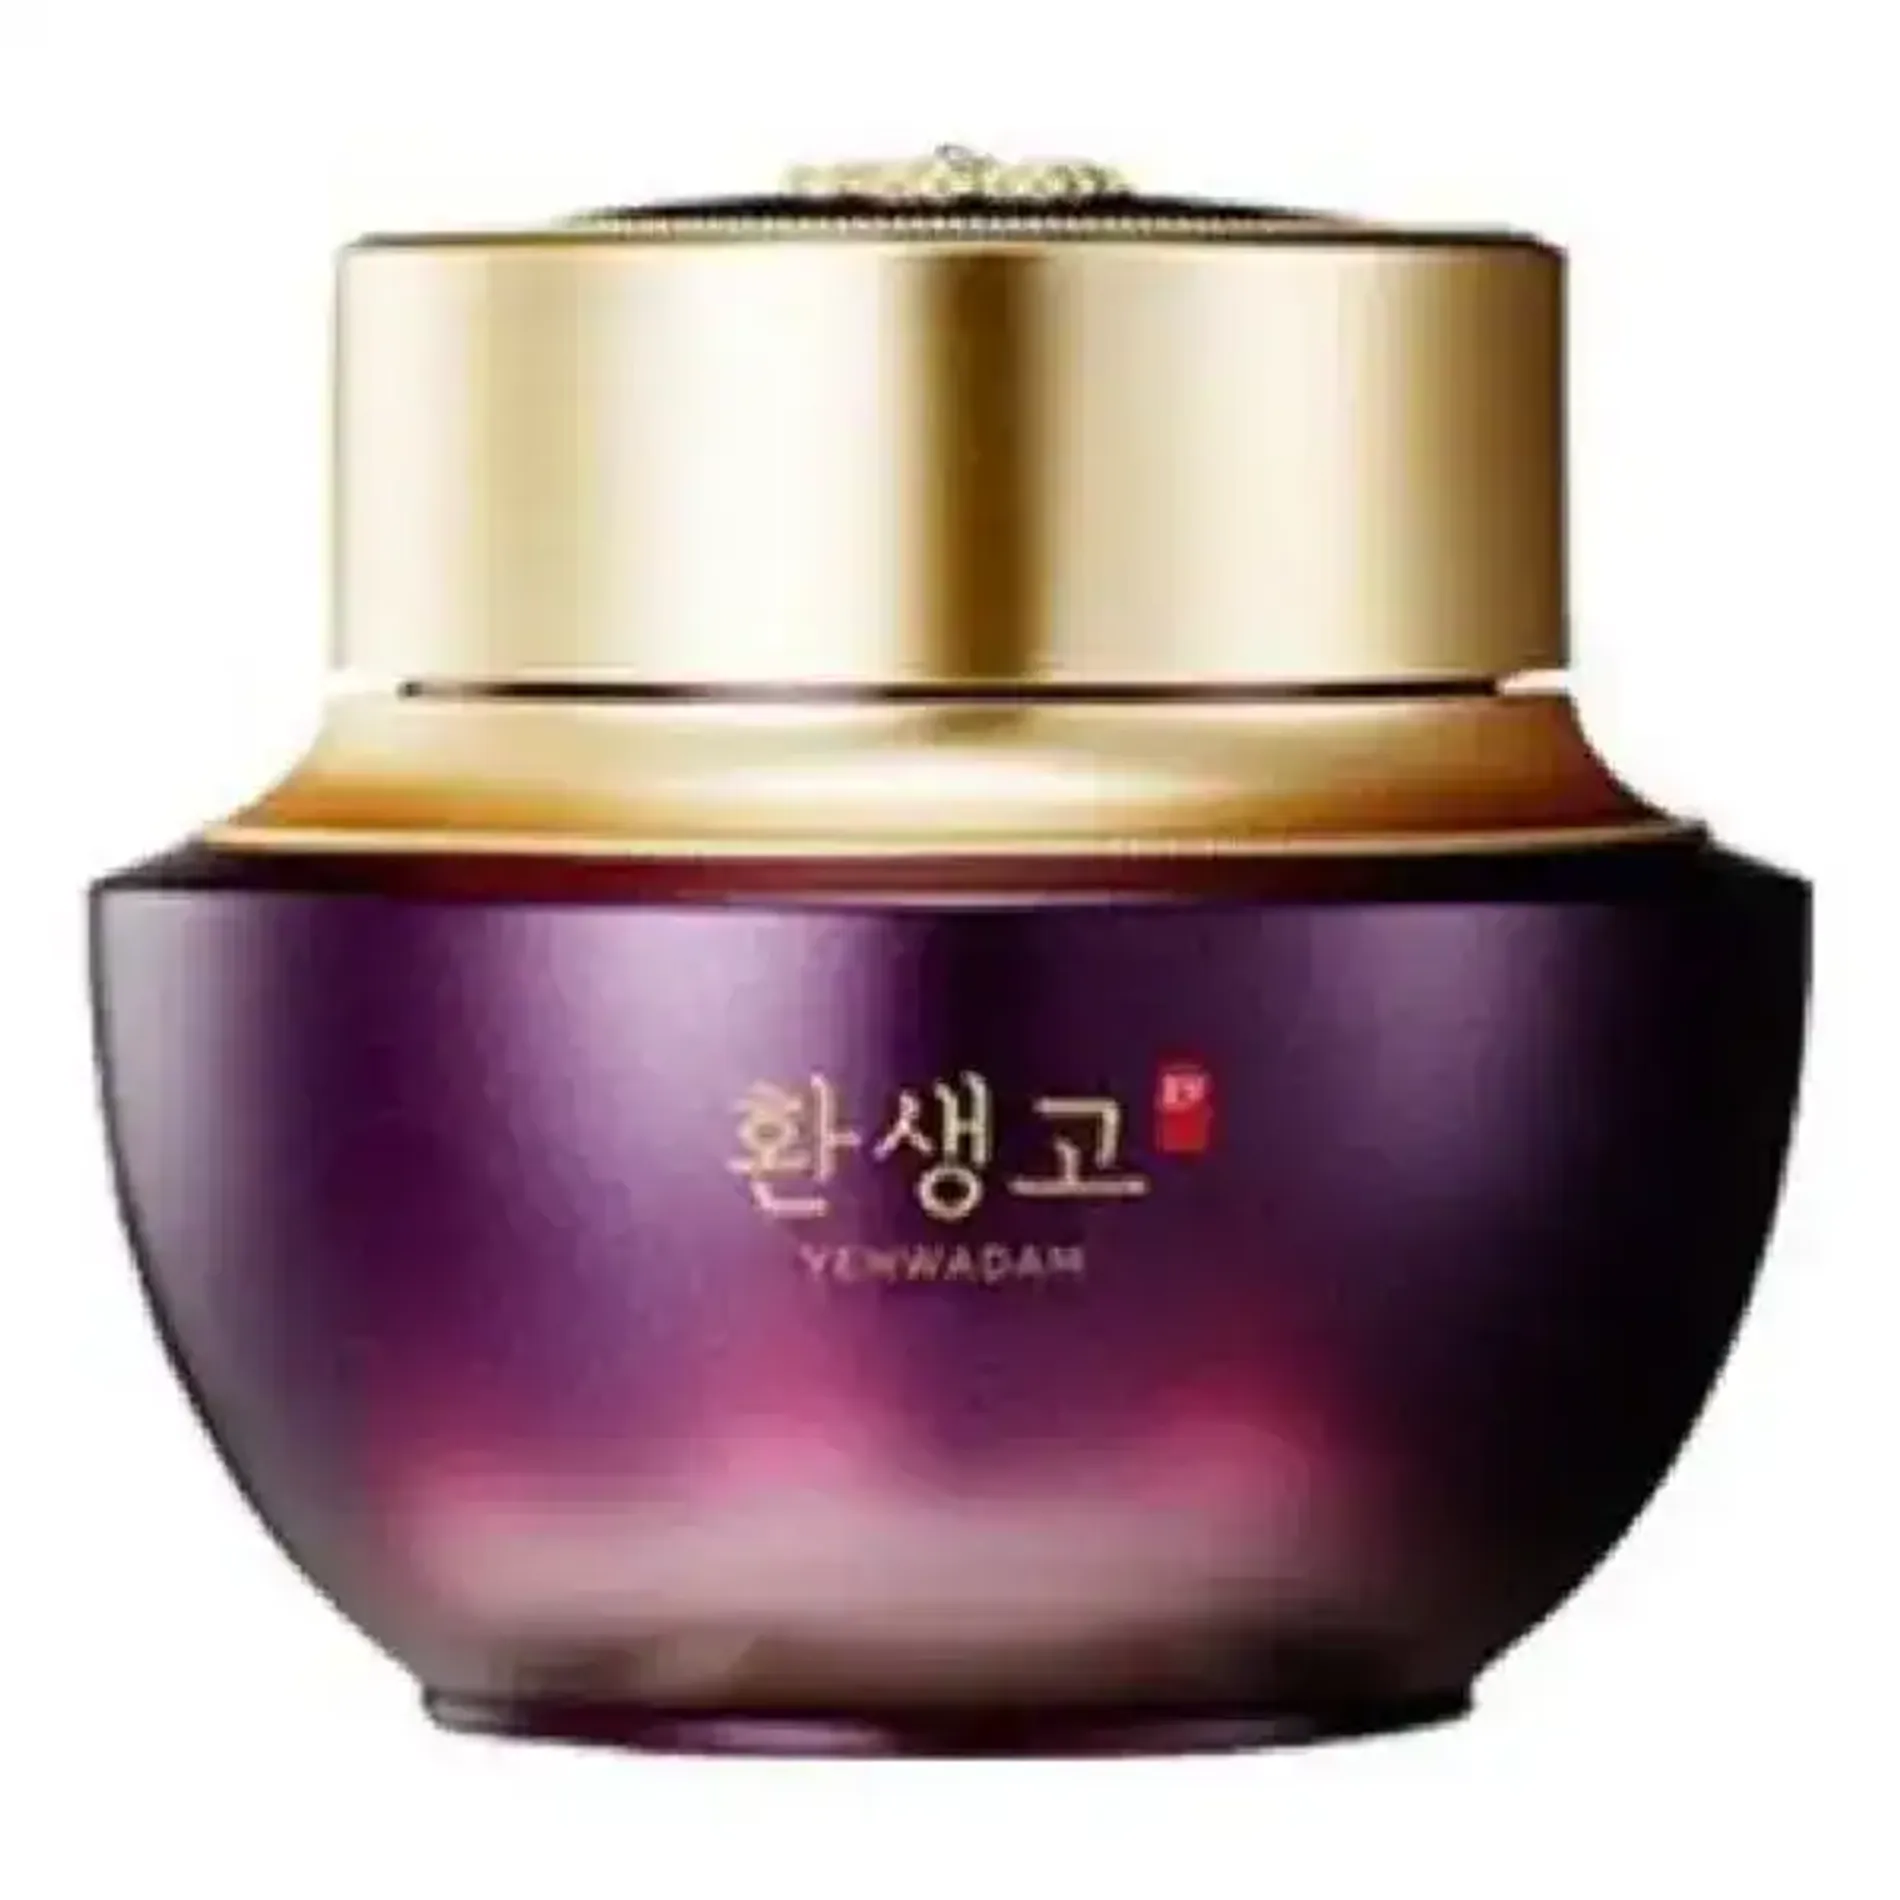 kem-duong-tre-hoa-vung-da-mat-thefaceshop-yehwadam-hwansaenggo-ultimate-rejuvenating-eye-cream-25ml-1